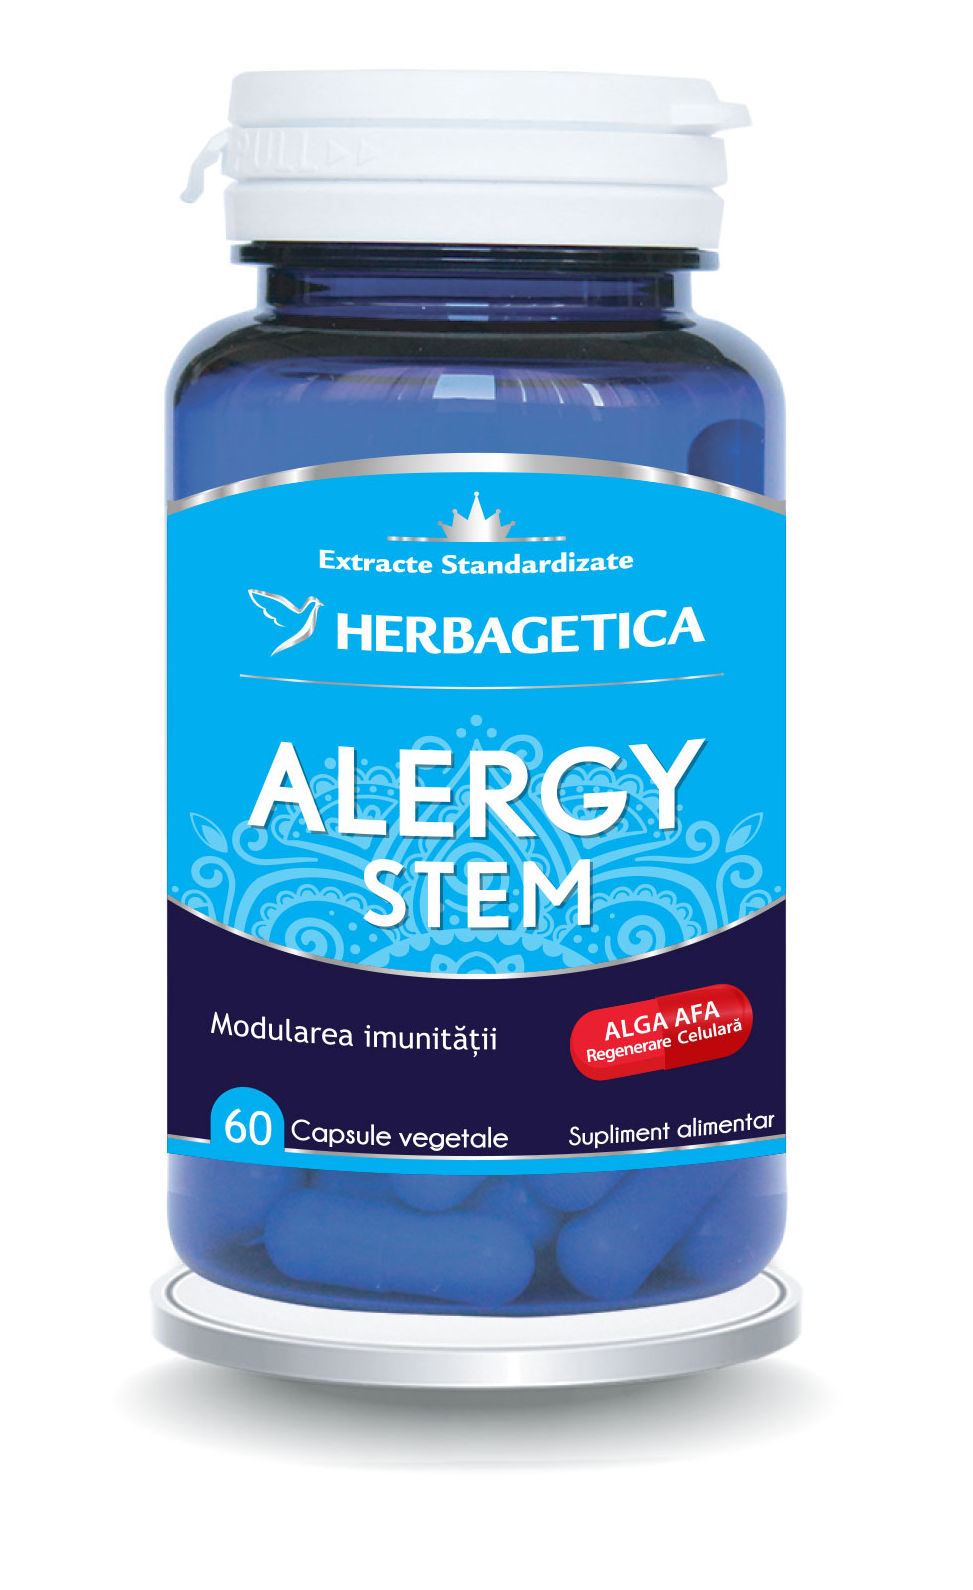 Alergy+ stem